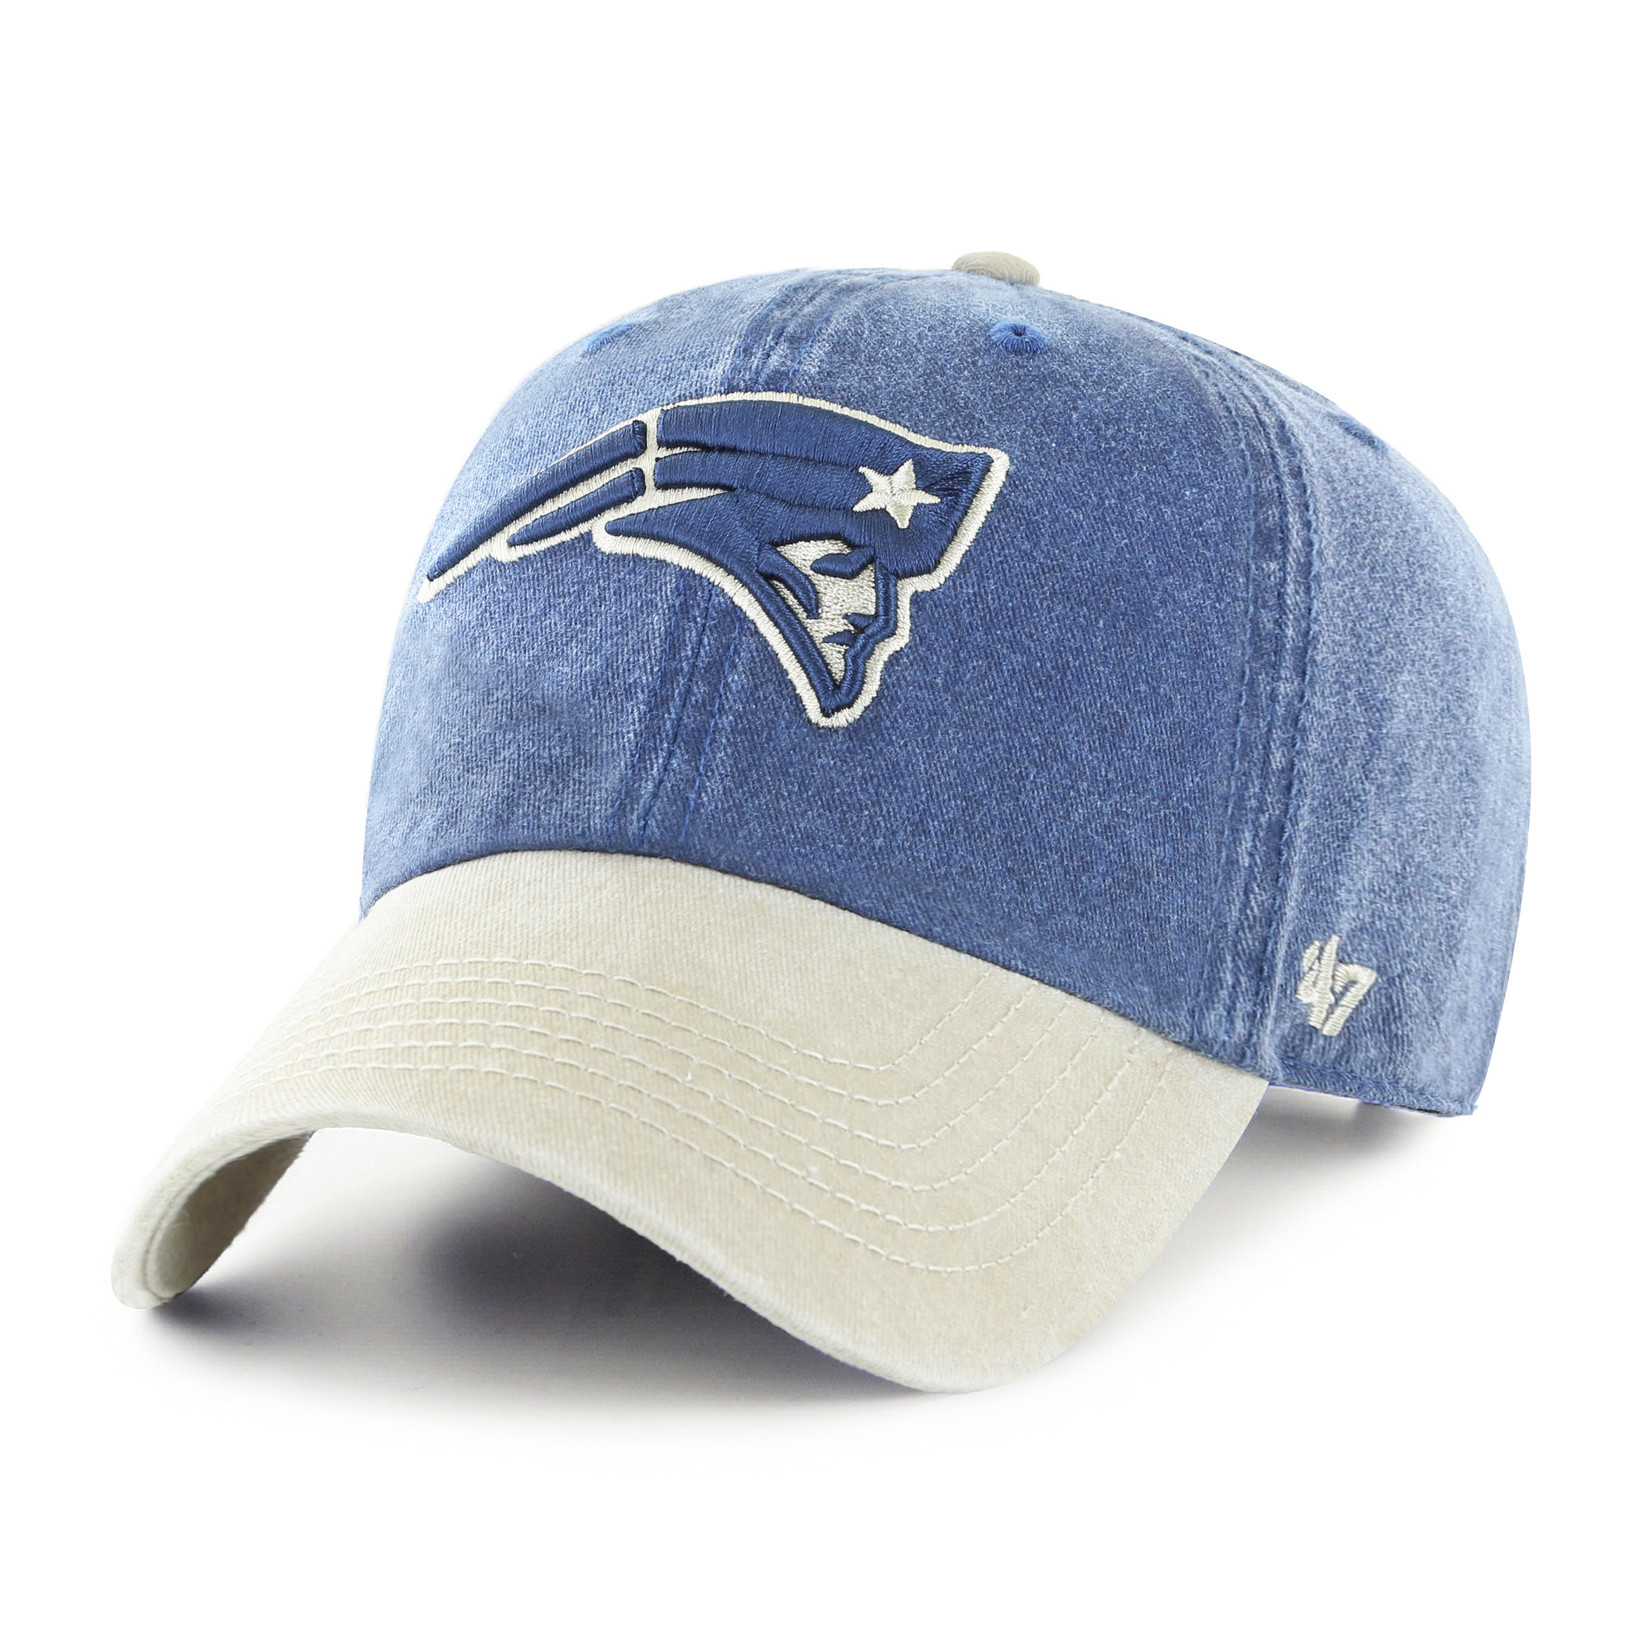 '47 Brand Patriots Hat 2-Tone - Denim/Beige